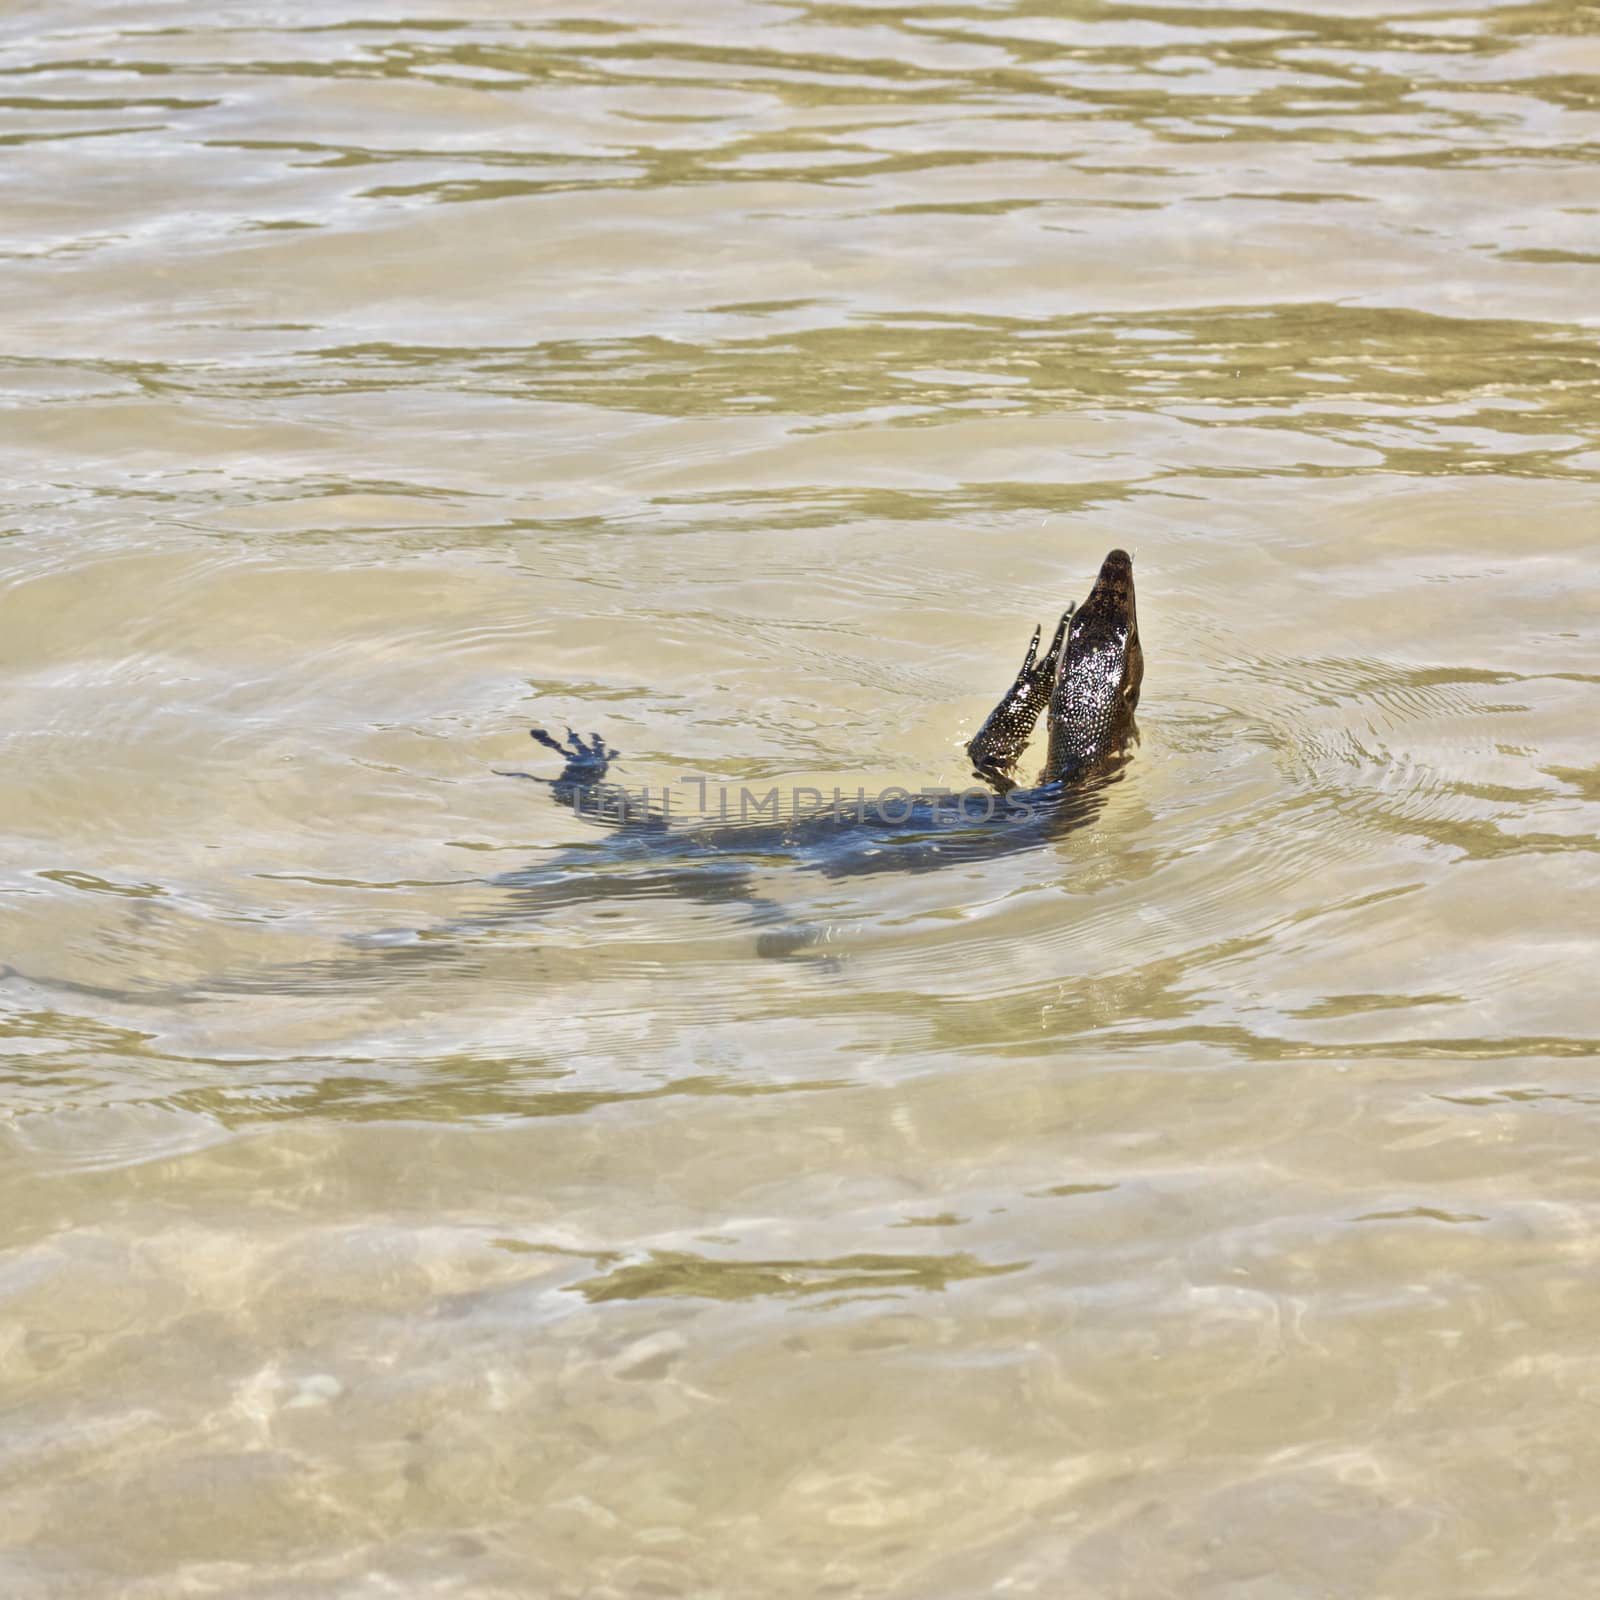 wild water monitor (Varanus salvator) swimming in a sea